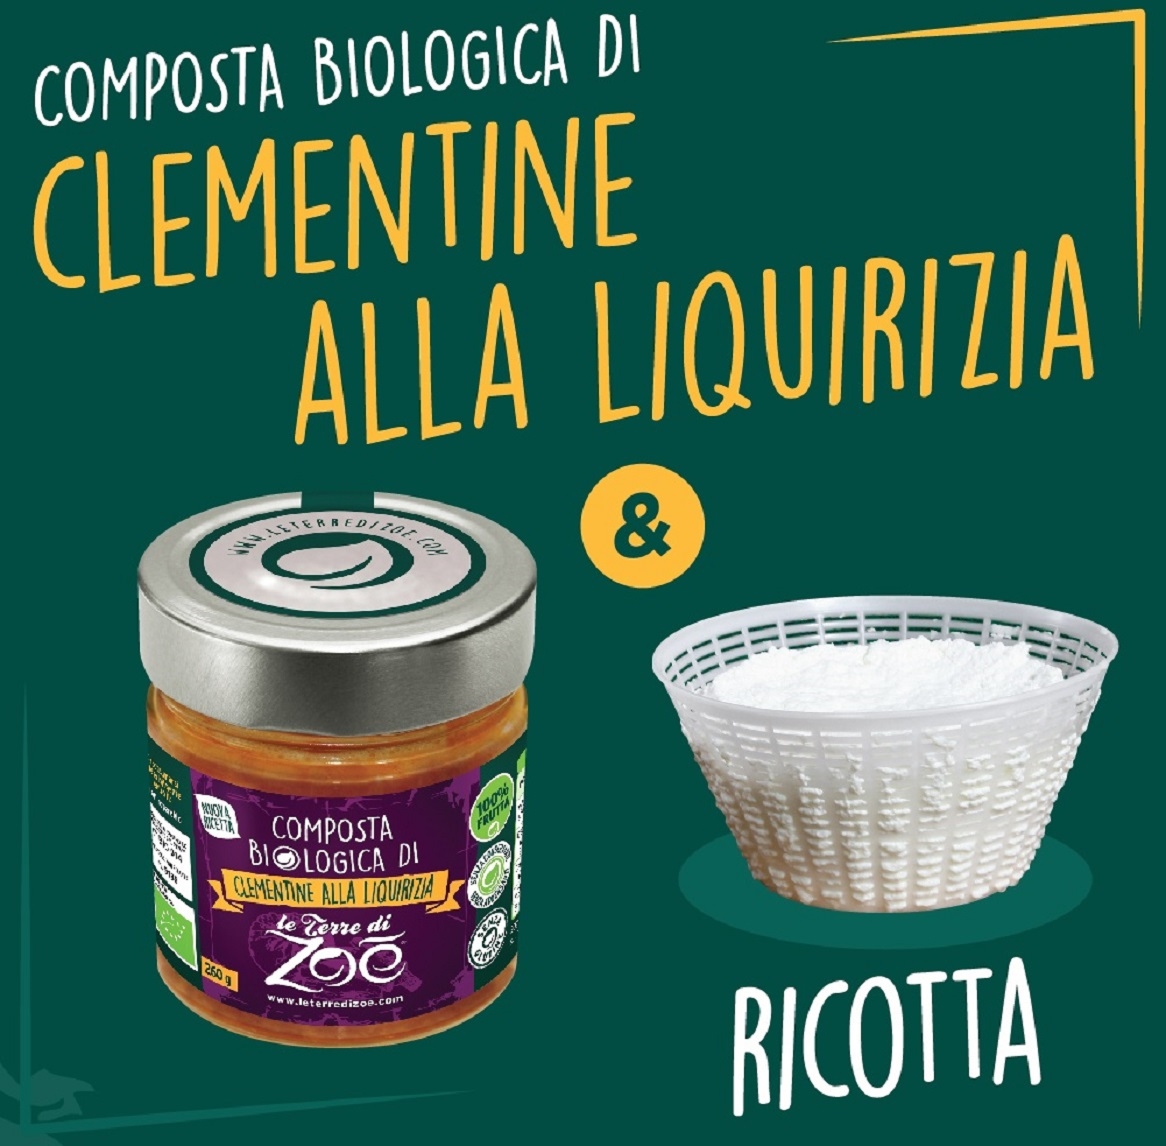 Italienisches Clementinen und Lakritze Kompotte 40g Le terre di zoè 4